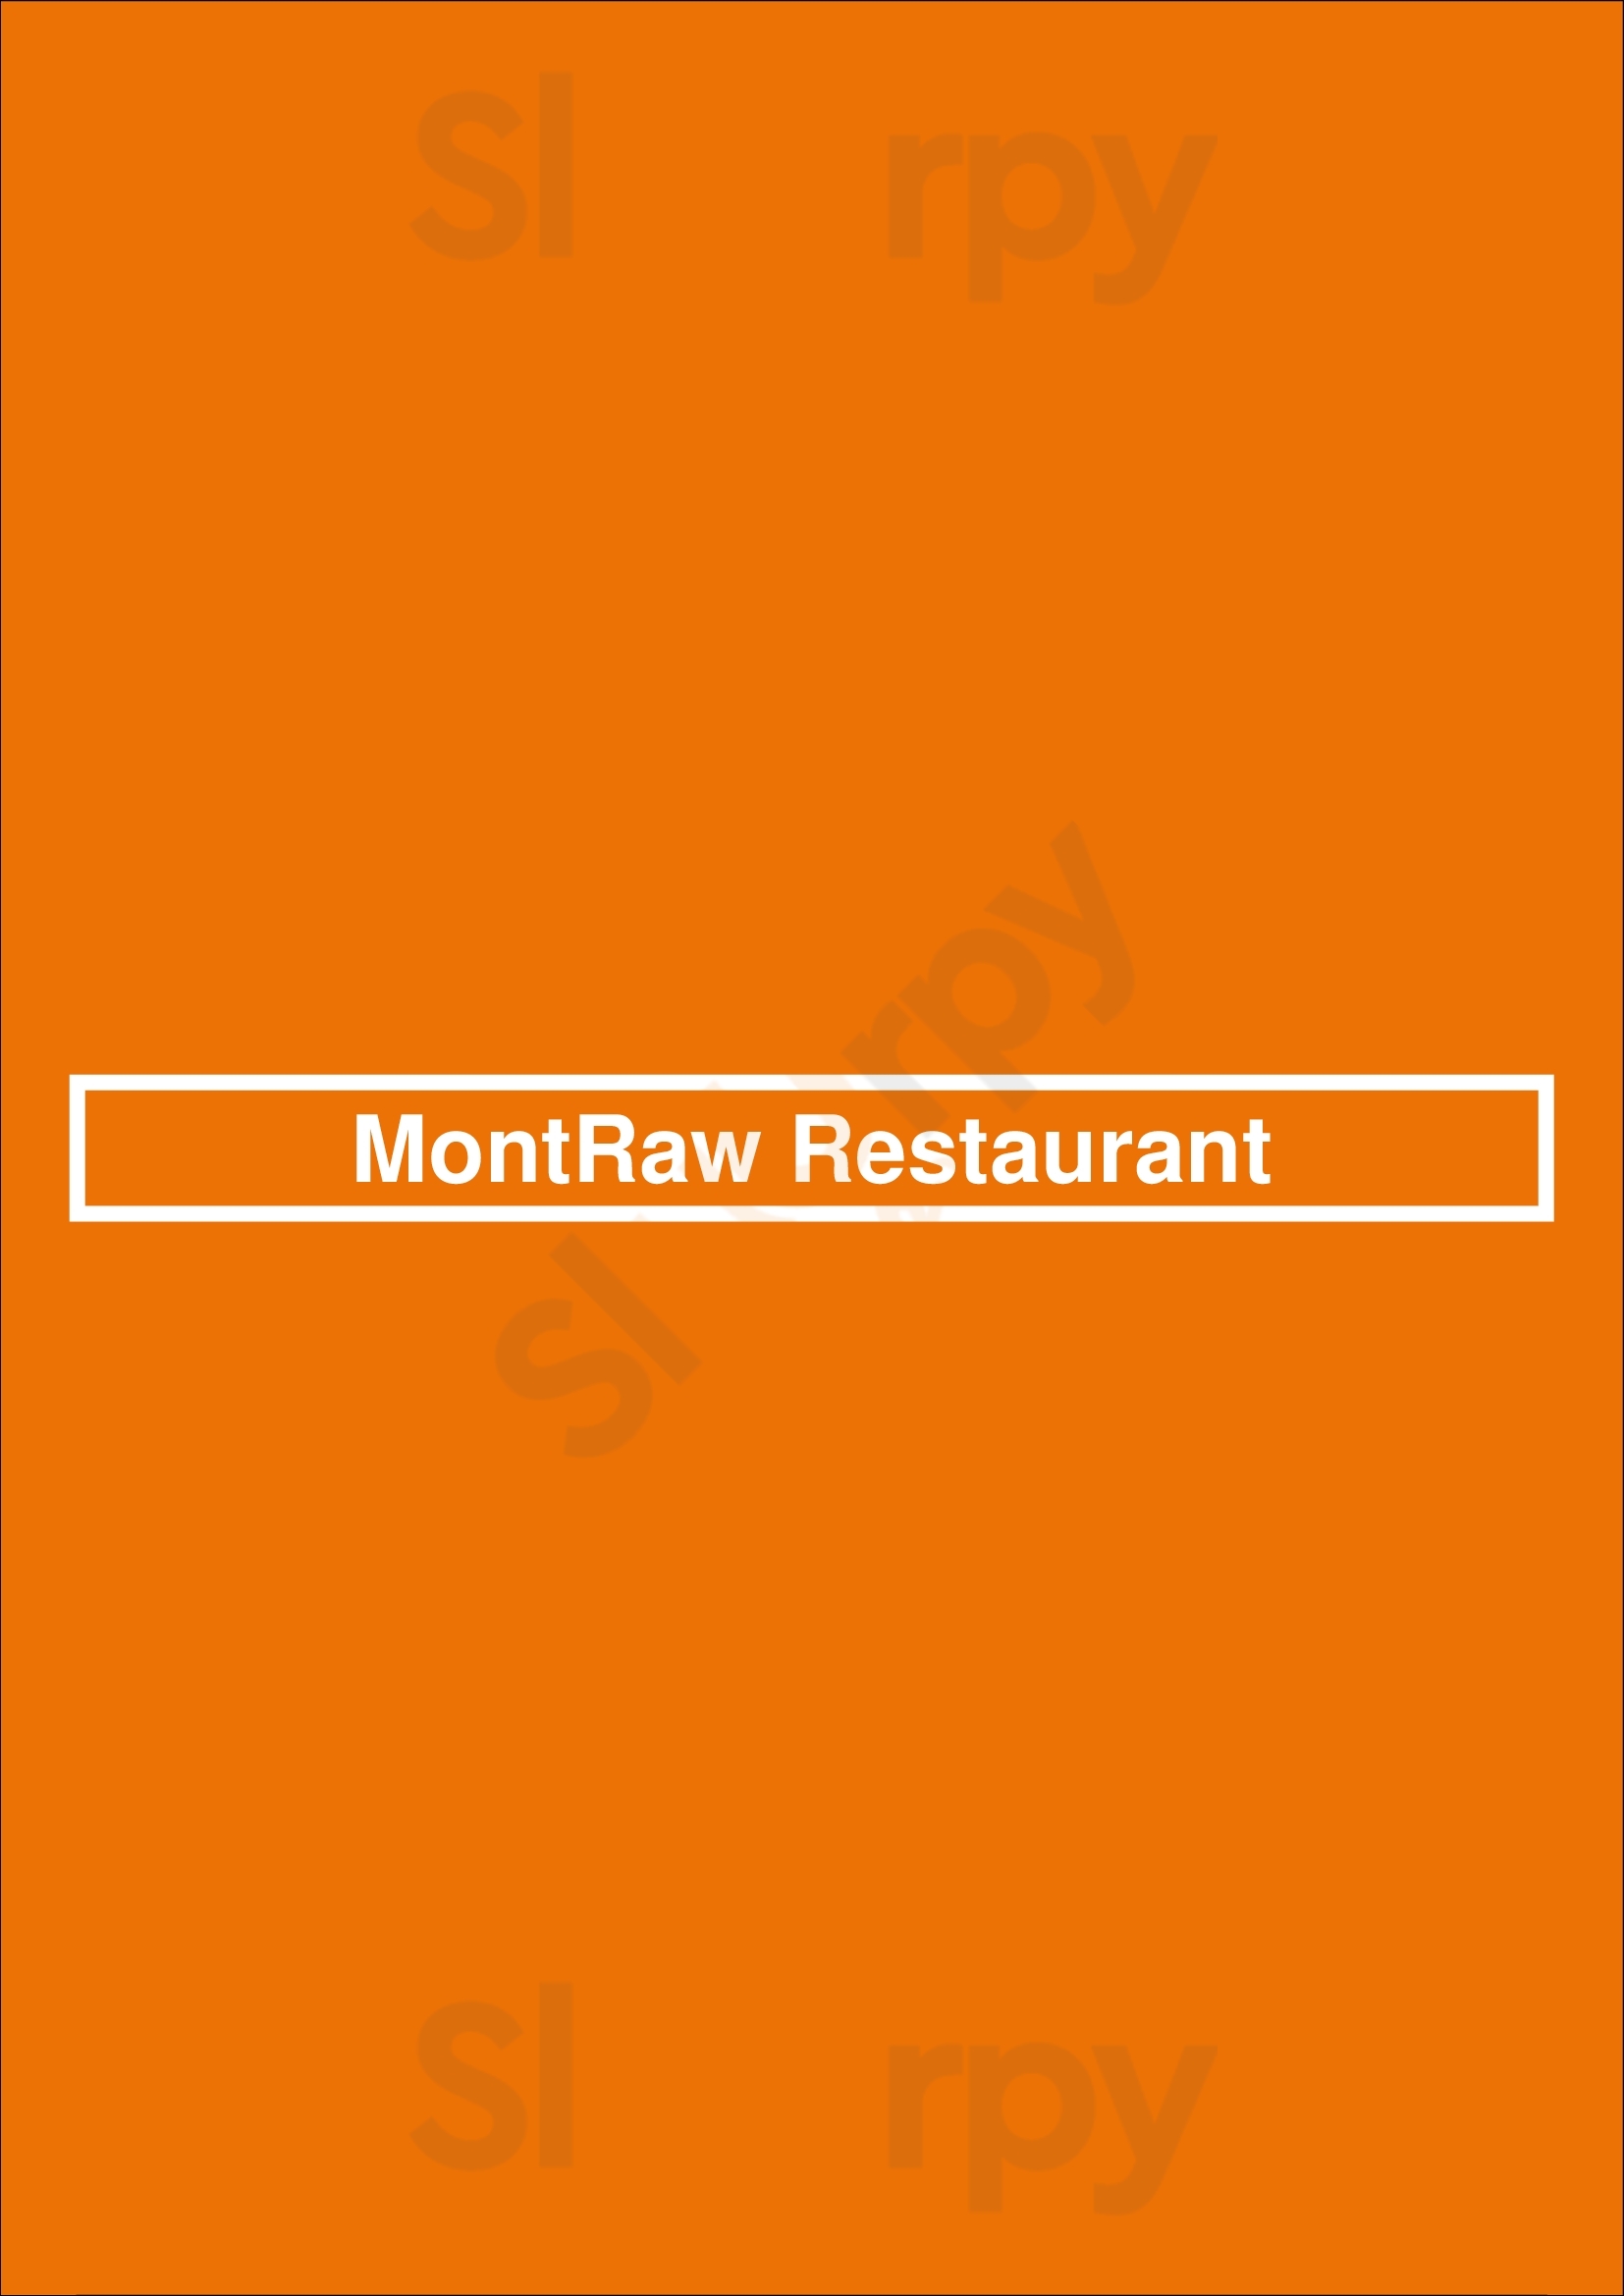 Montraw Restaurant Berlin Menu - 1